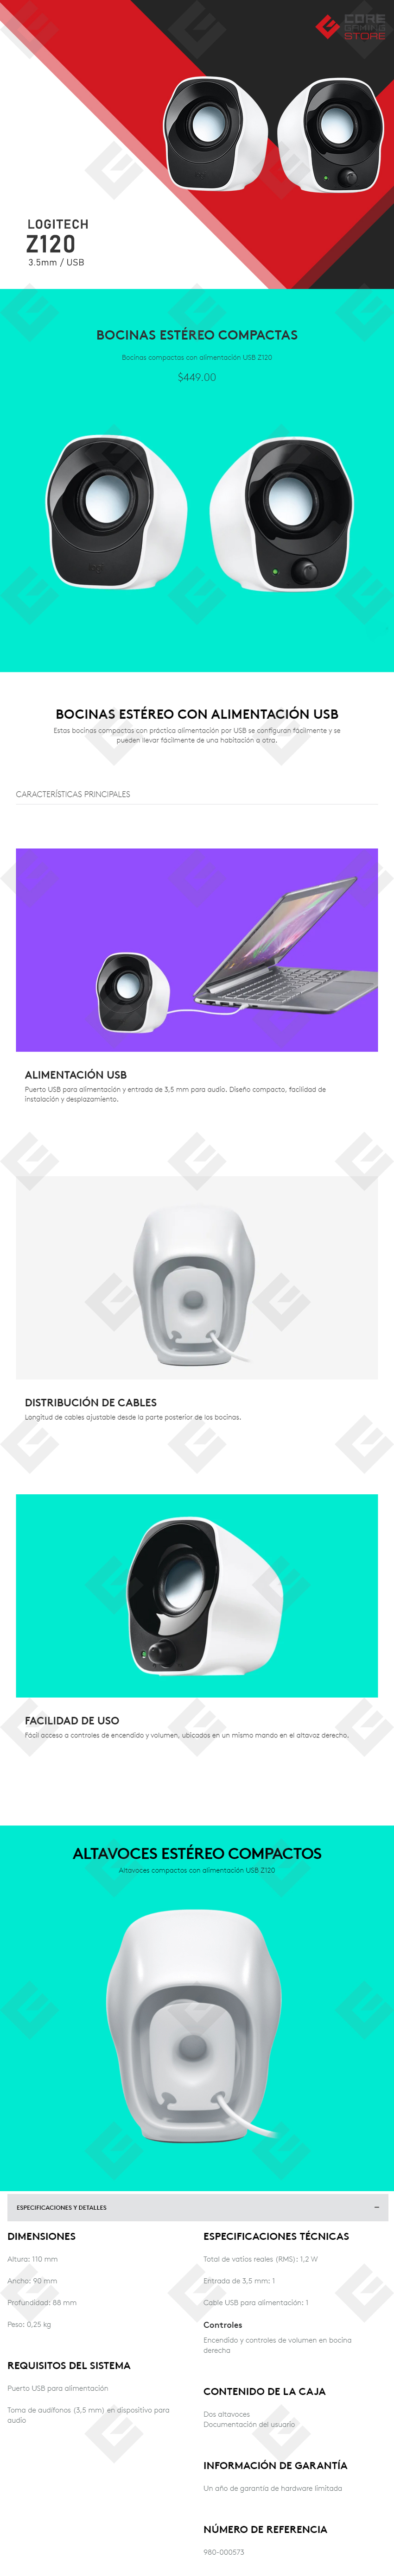 Bocinas Logitech Z120 - 2.0 Canales - Alimentacion USB - 980-000573